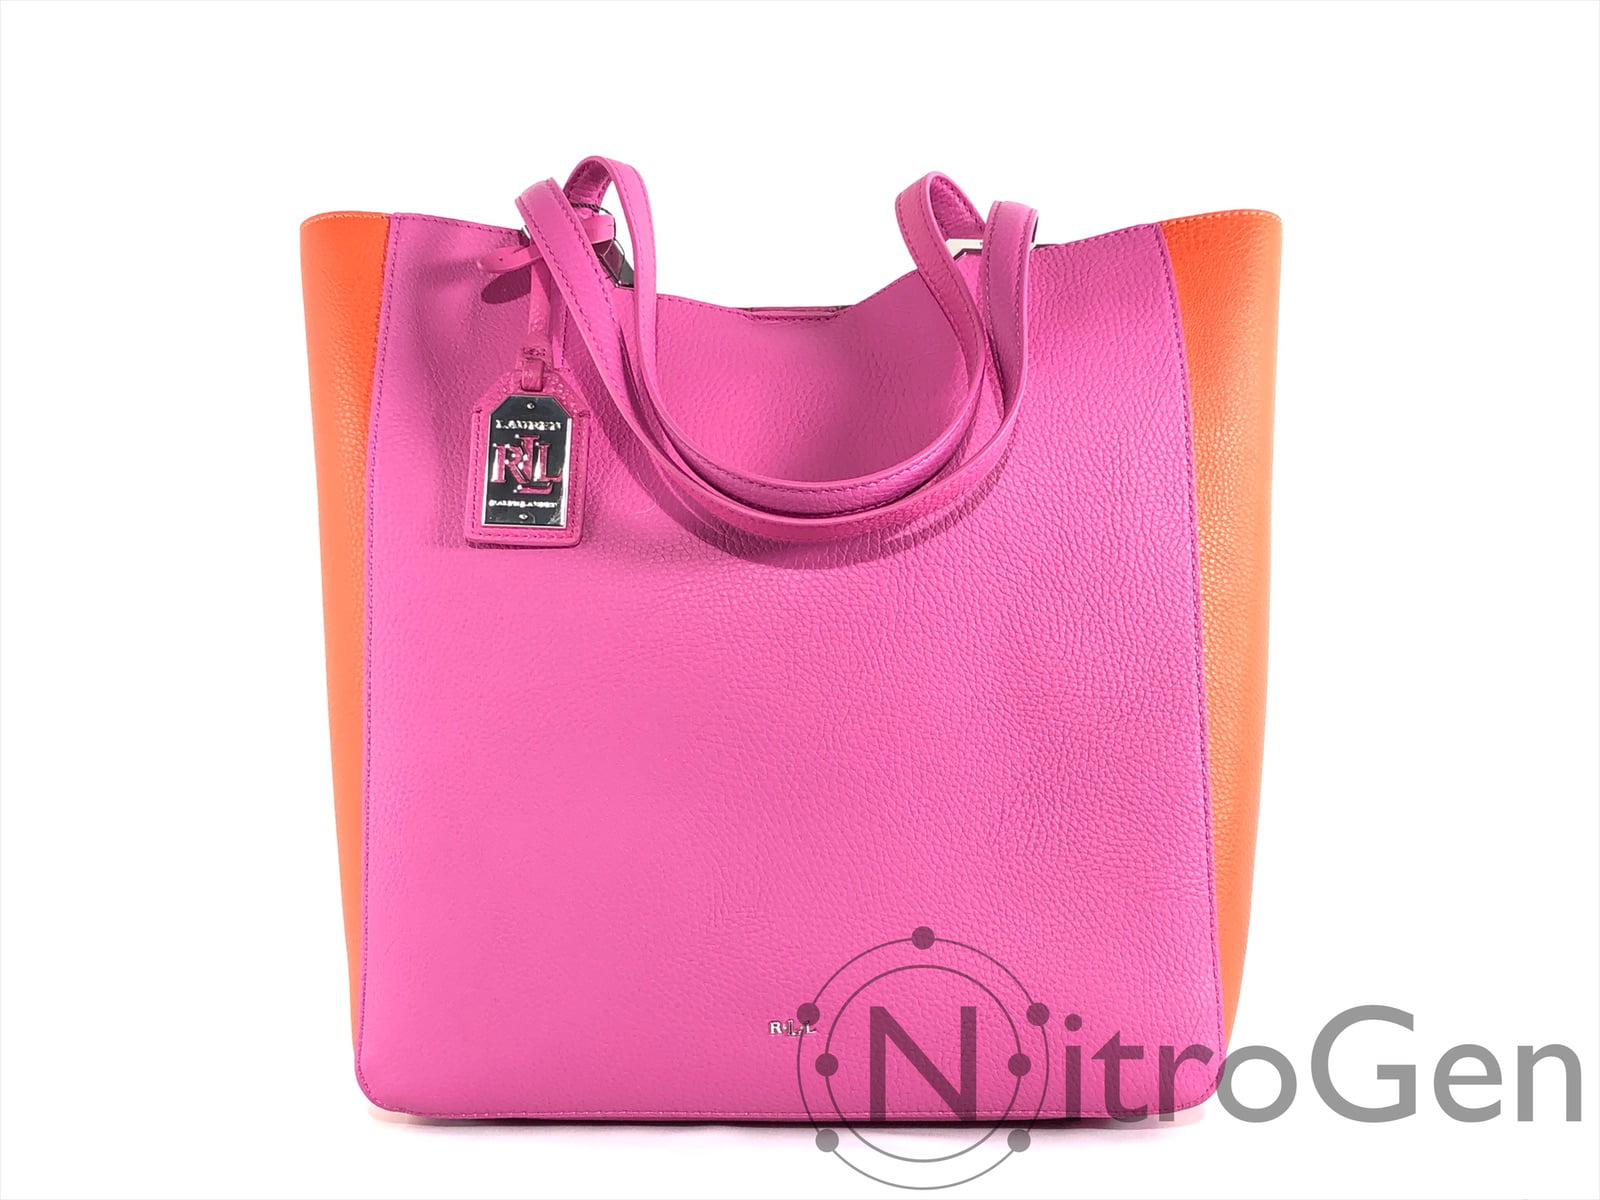 Women Candy Color Clear Transparent Handbag Tote Shoulder Bags Beach Bag N7